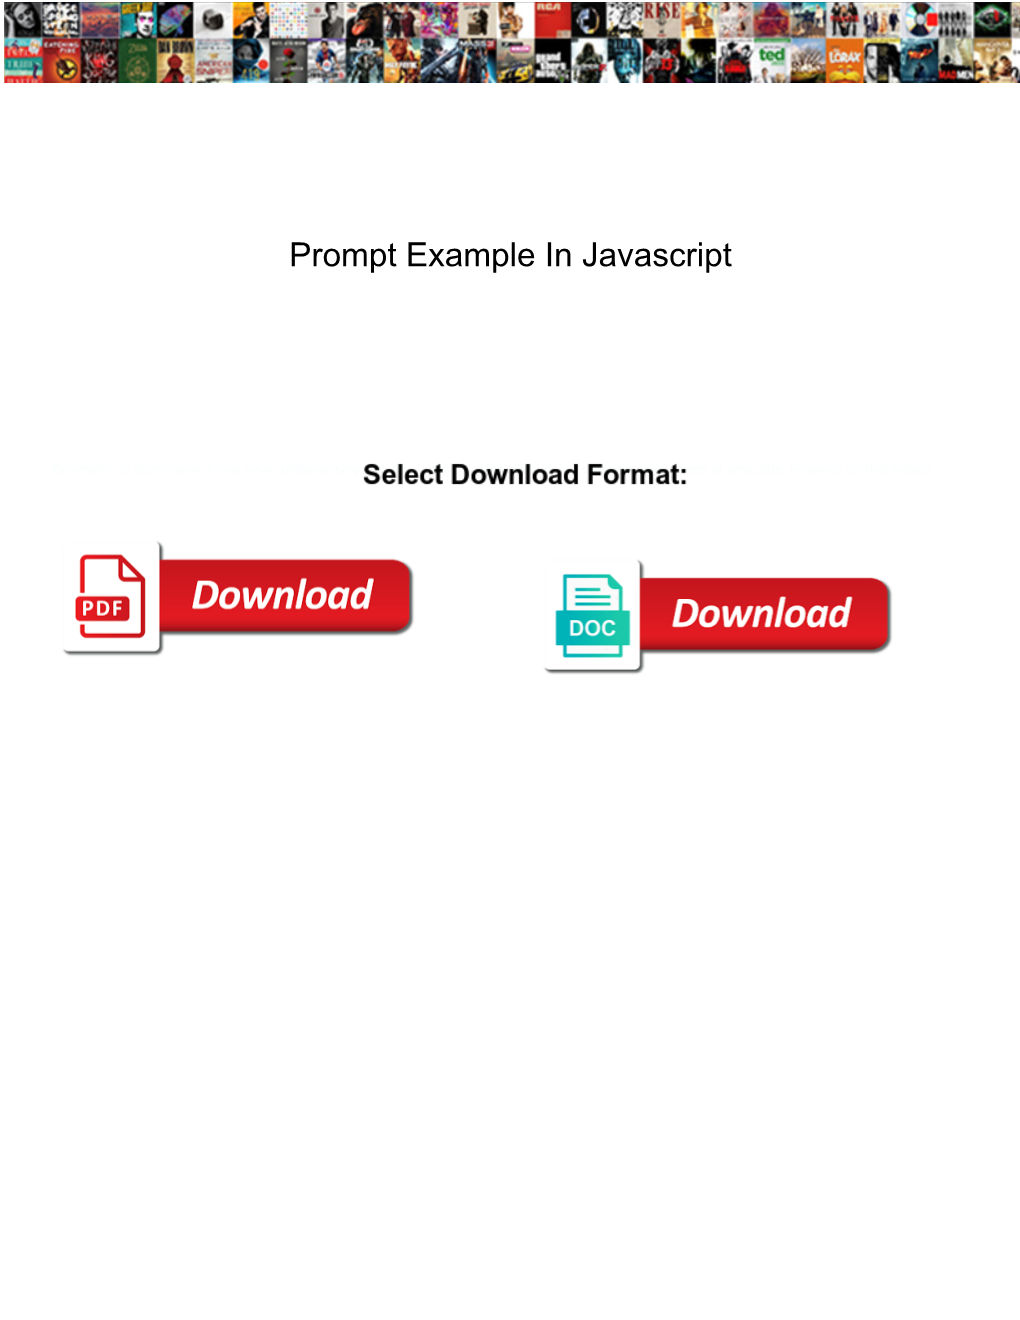 Prompt Example in Javascript